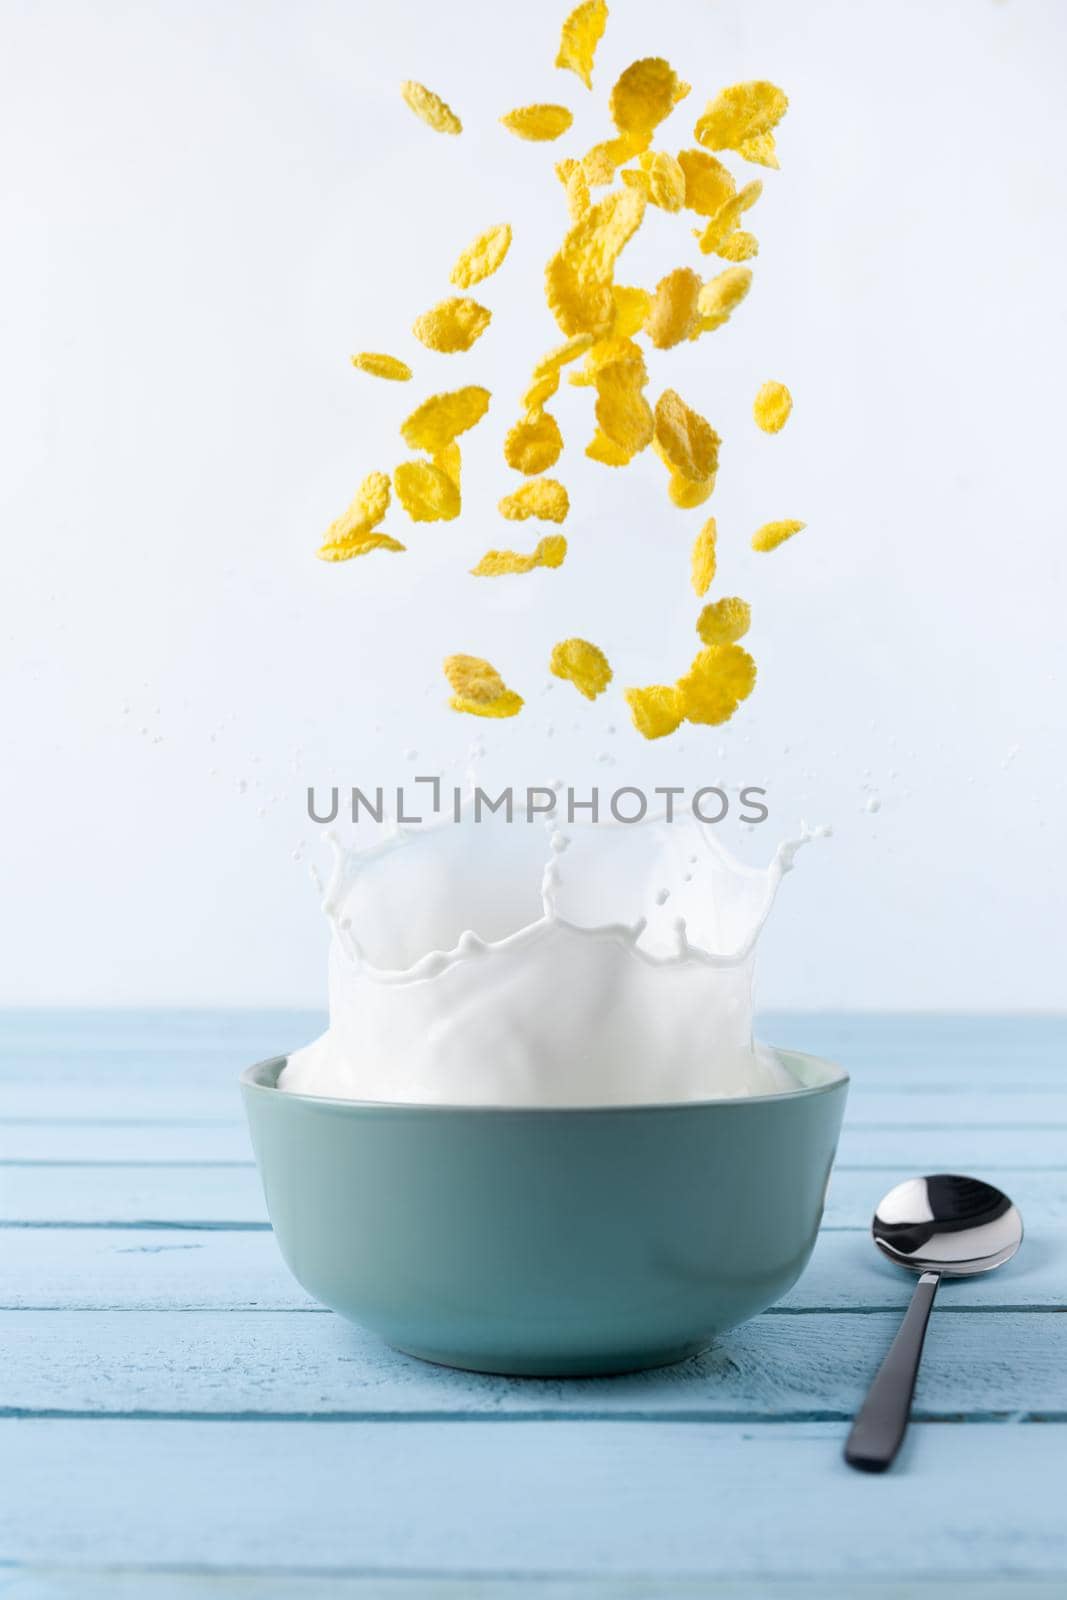 Healthy Breakfast-Cornflakes and Milk Splash on blue background.